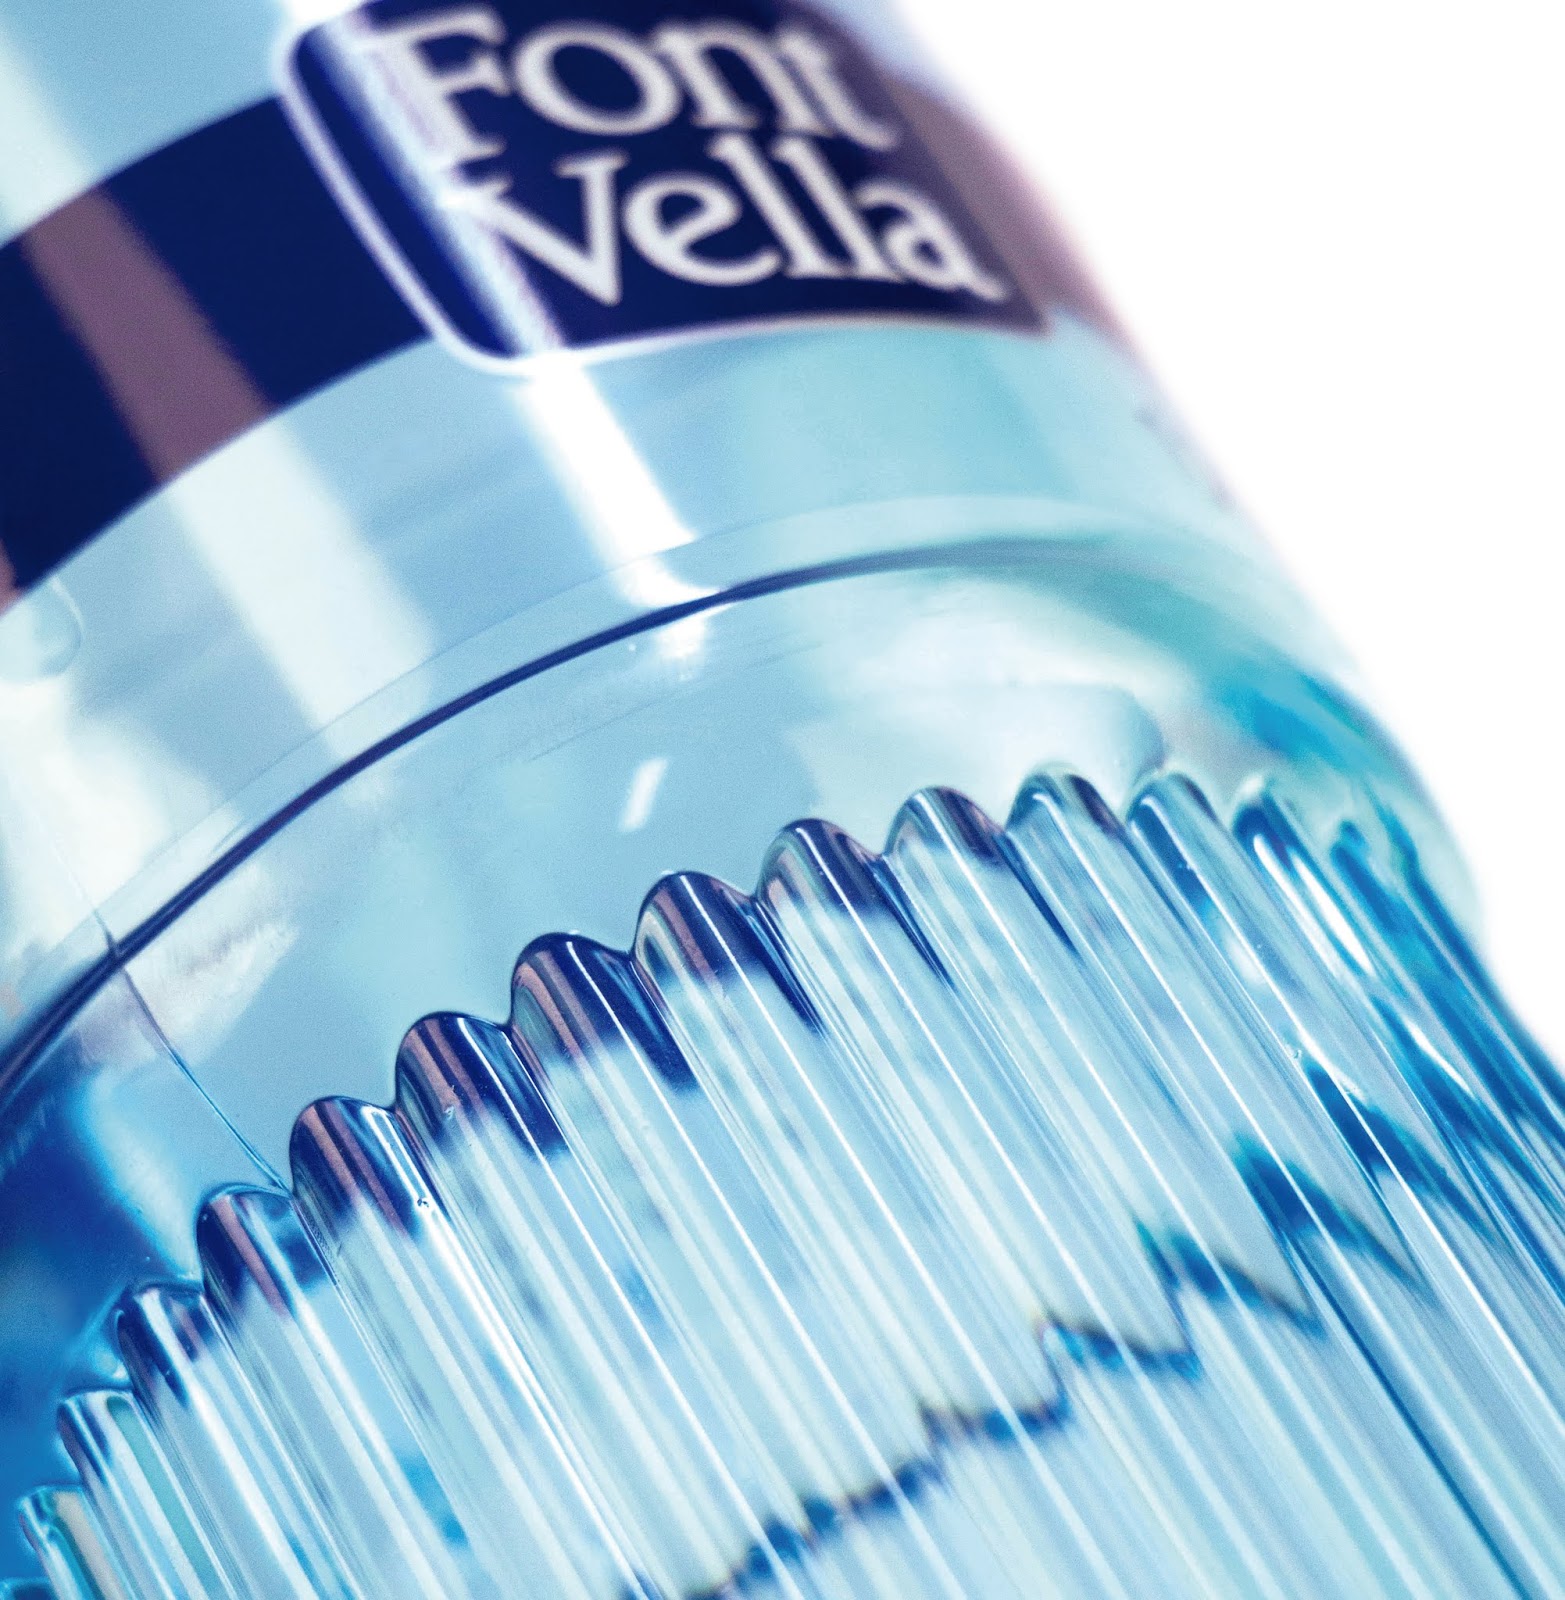 Font Vella纯净水包装设计